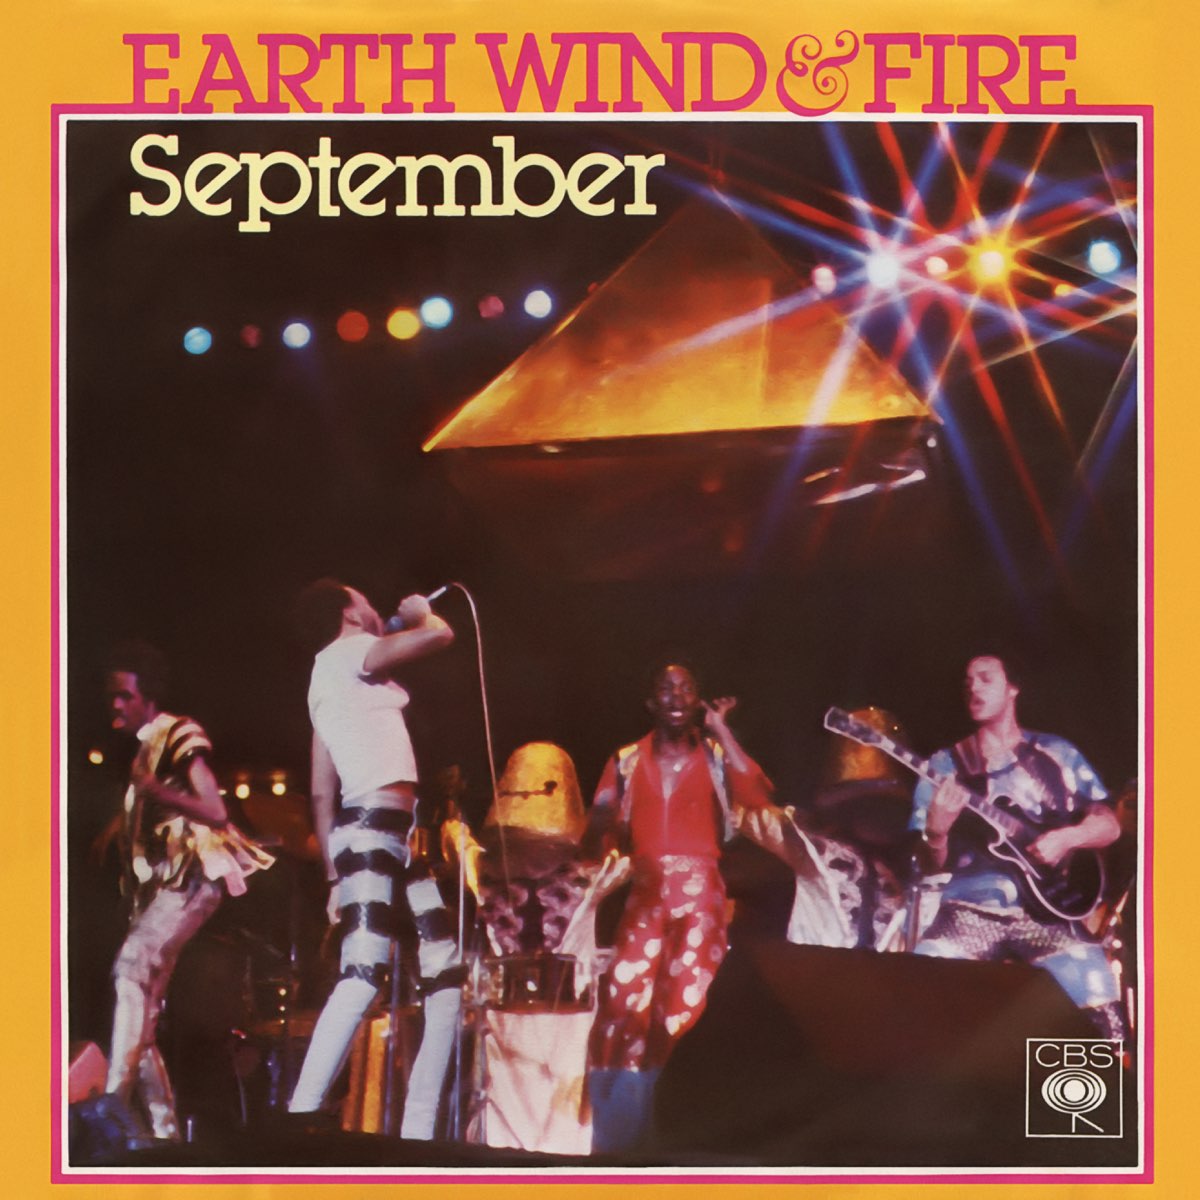 ‎September - Album by Earth, Wind & Fire - Apple Music